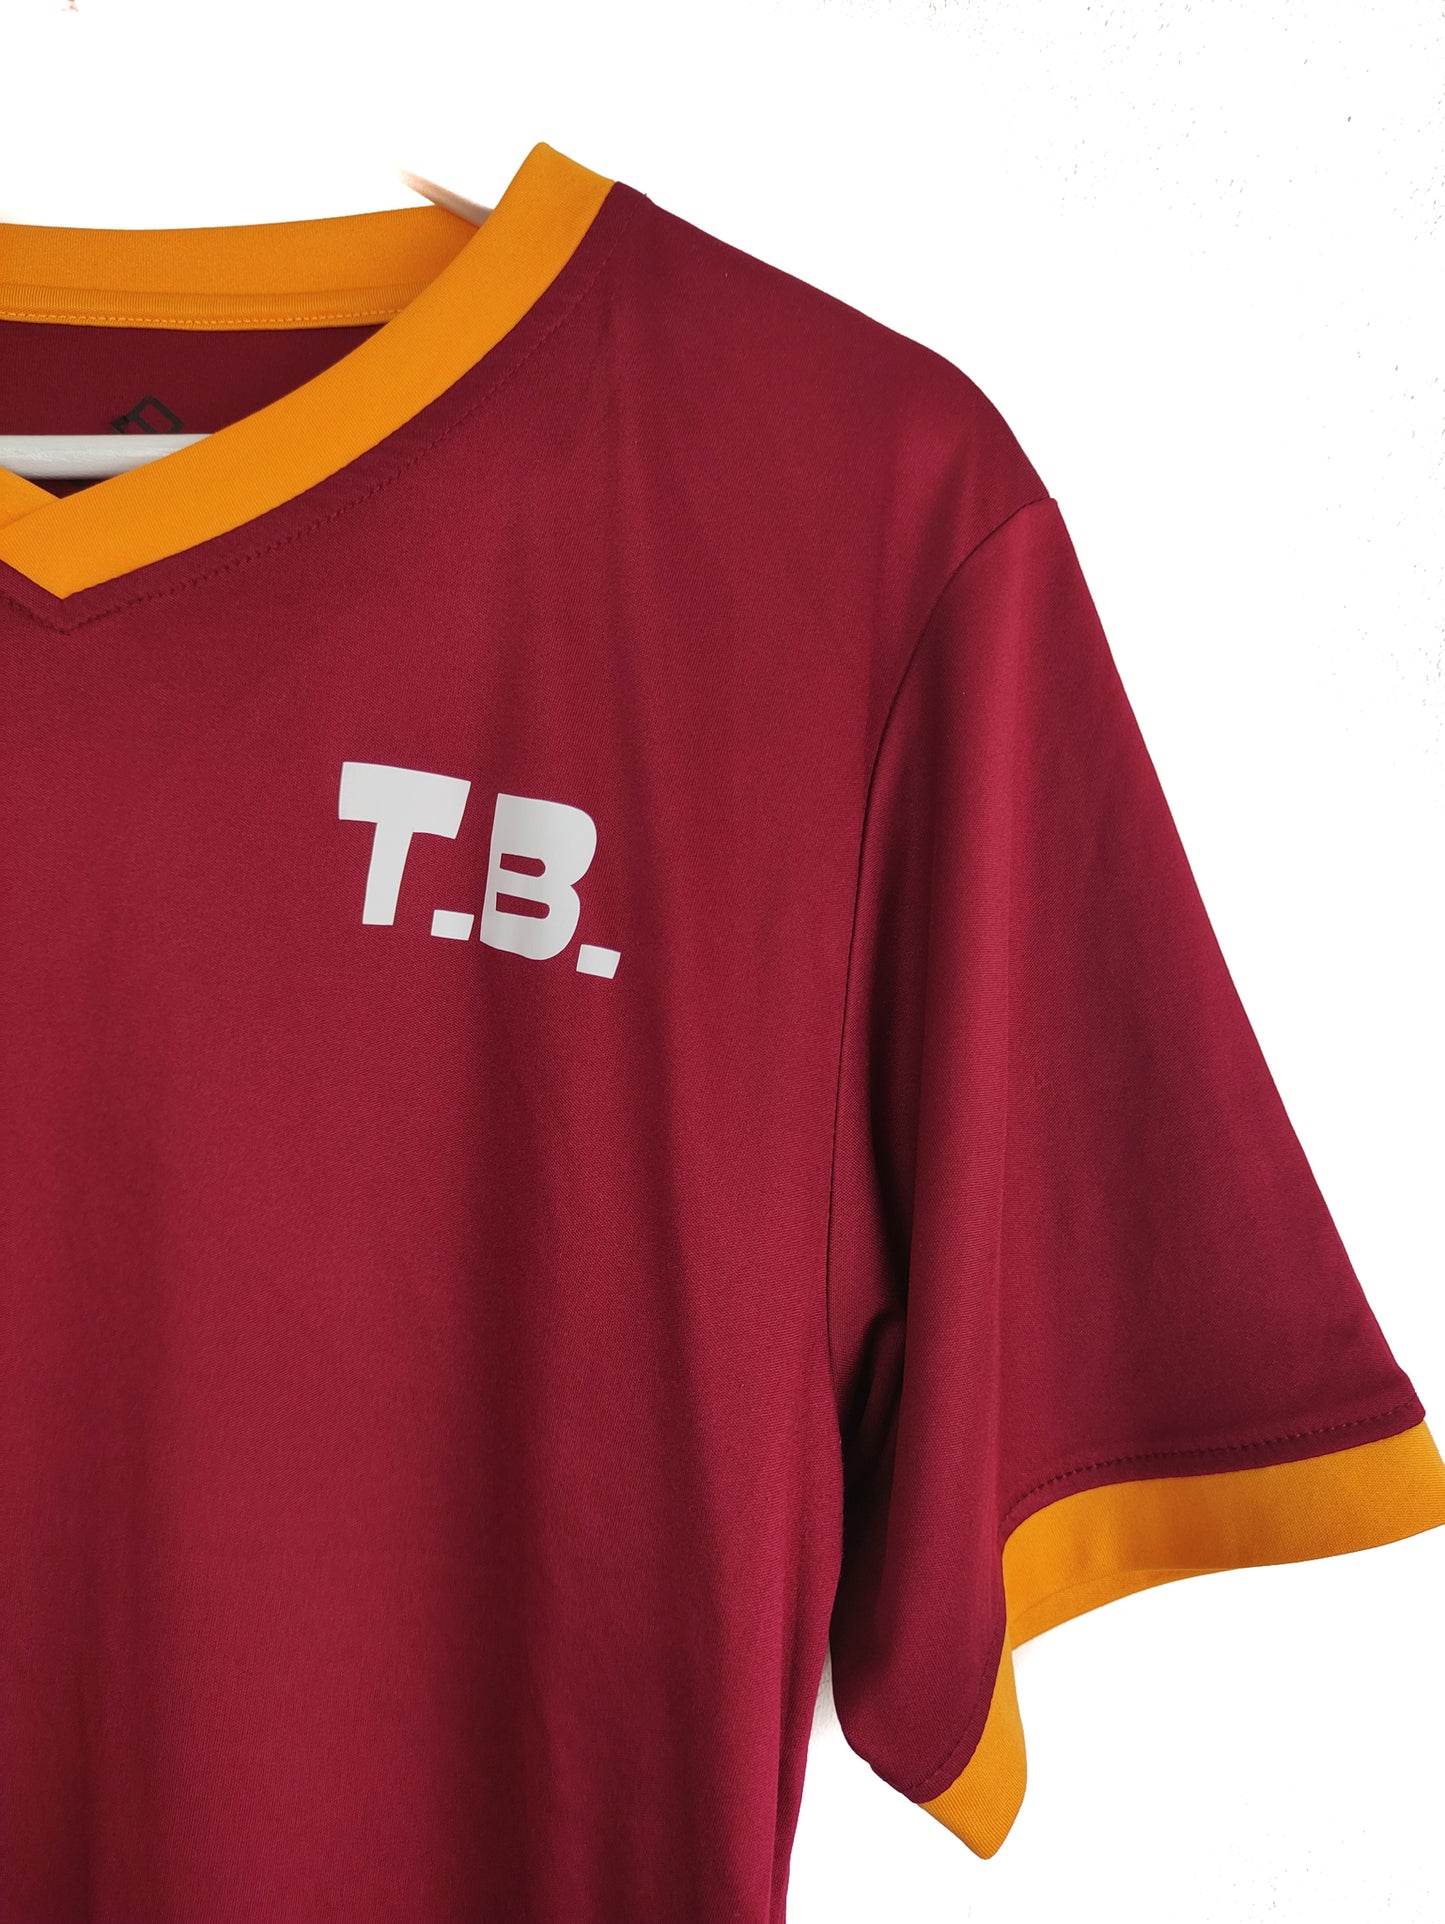 Aνδρική Αθλητική Mπλούζα - T-Shirt  ABC σε Μπορντό Χρώμα (Medium)